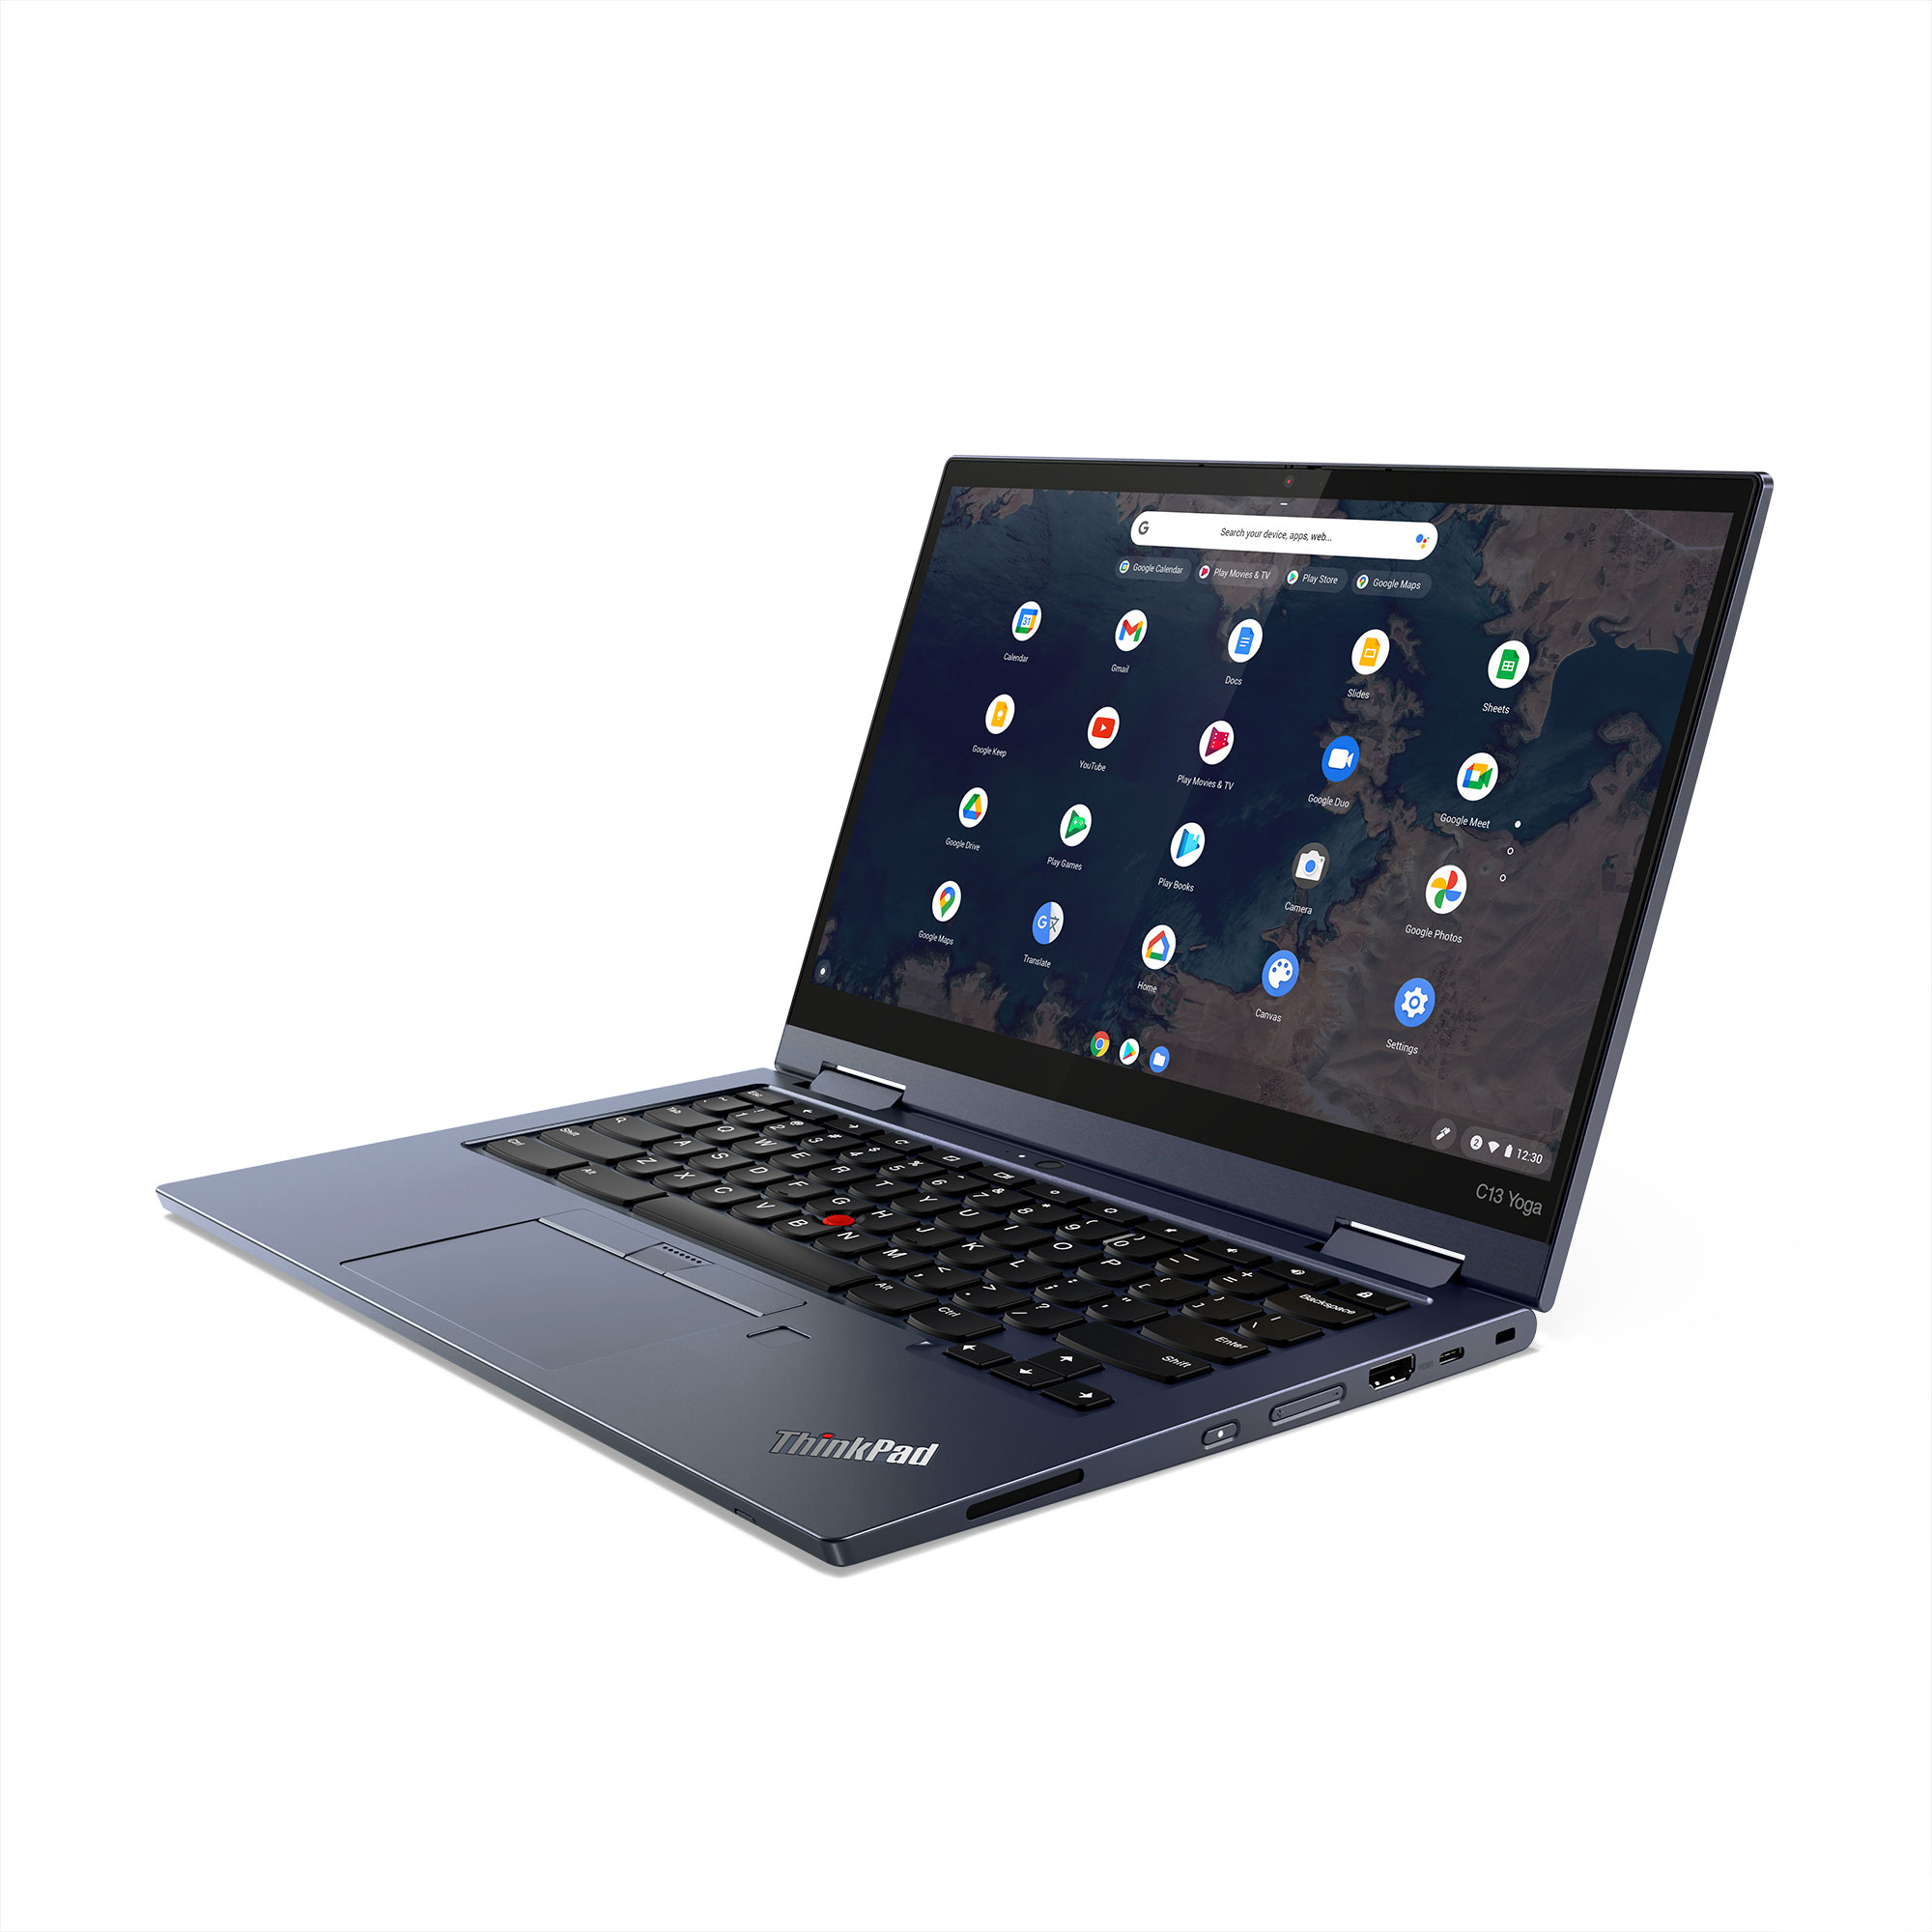 Lenovo ThinkPad C13 Yoga Chromebook 13.3" FHD 2-in-1s Touchscreen Laptop, AMD Athlon Gold 3150C, 4GB RAM, 32GB HD, Chrome OS, Blue, 20UX001PUS - image 2 of 7